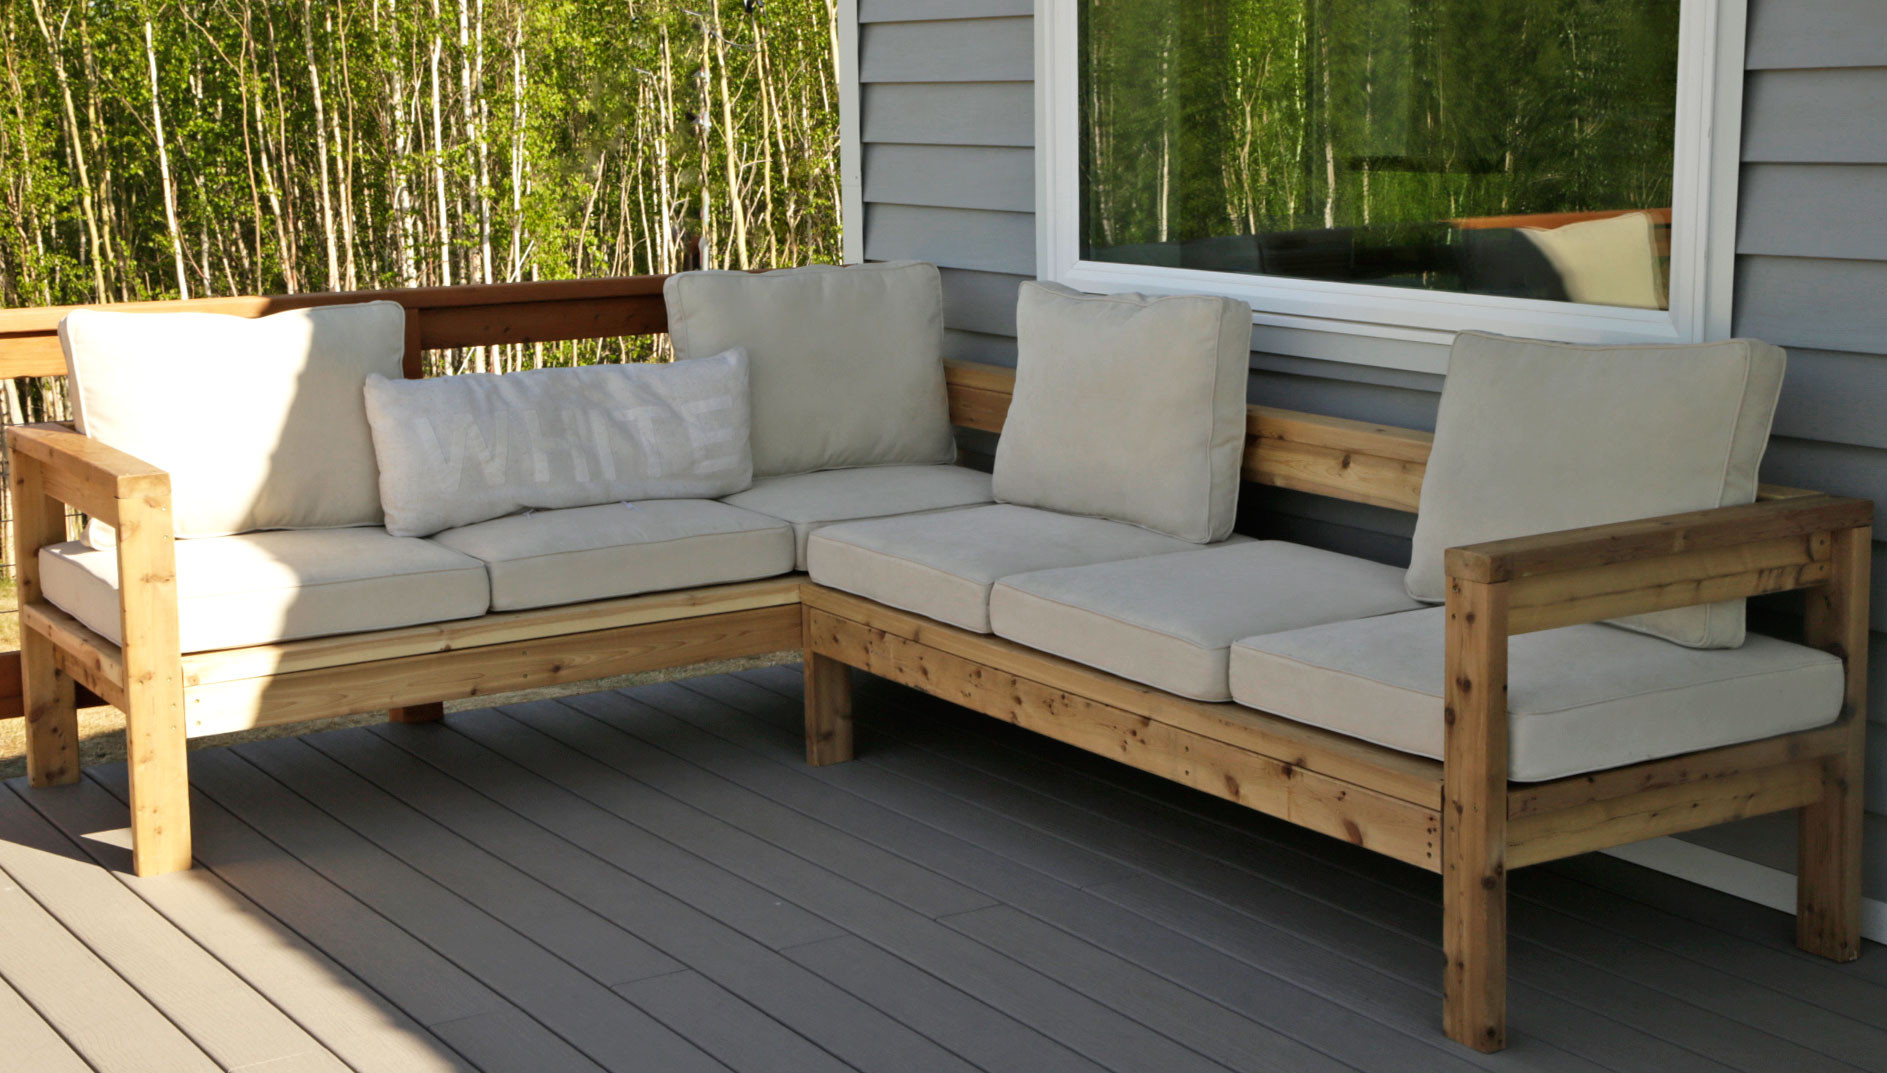 DIY Outdoor Sectional 2X4
 Furniture Inspiring Patio Furniture Design Ideas With Diy